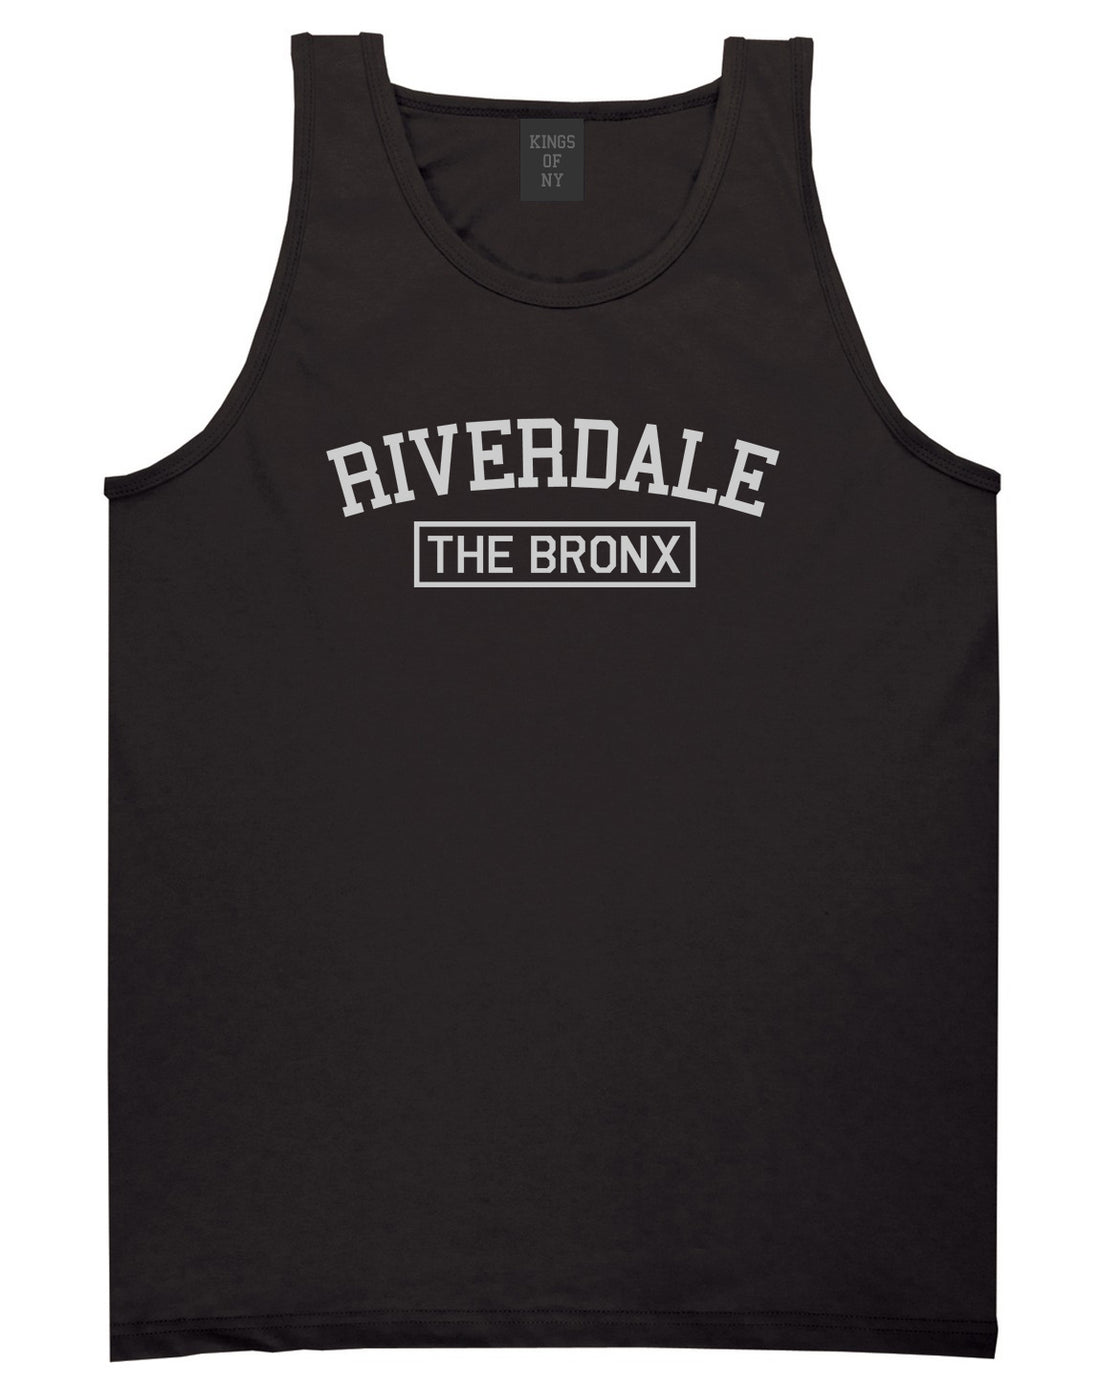 Riverdale The Bronx NY Mens Tank Top T-Shirt Black